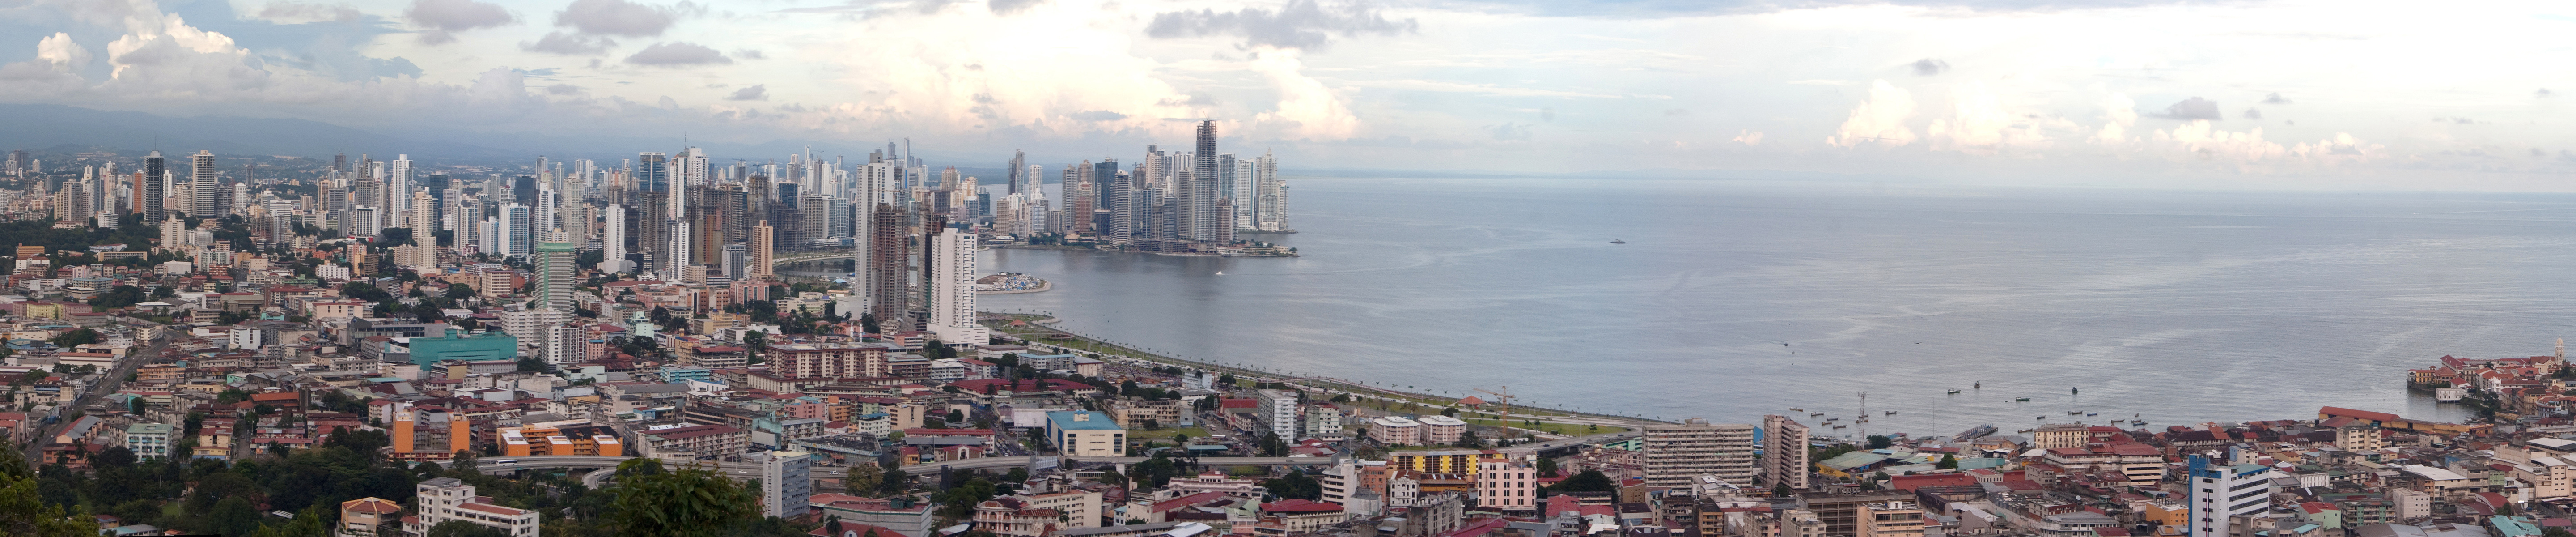 Wallpaper Panama City Ancon Hill Skyline Panorama Dvdbash